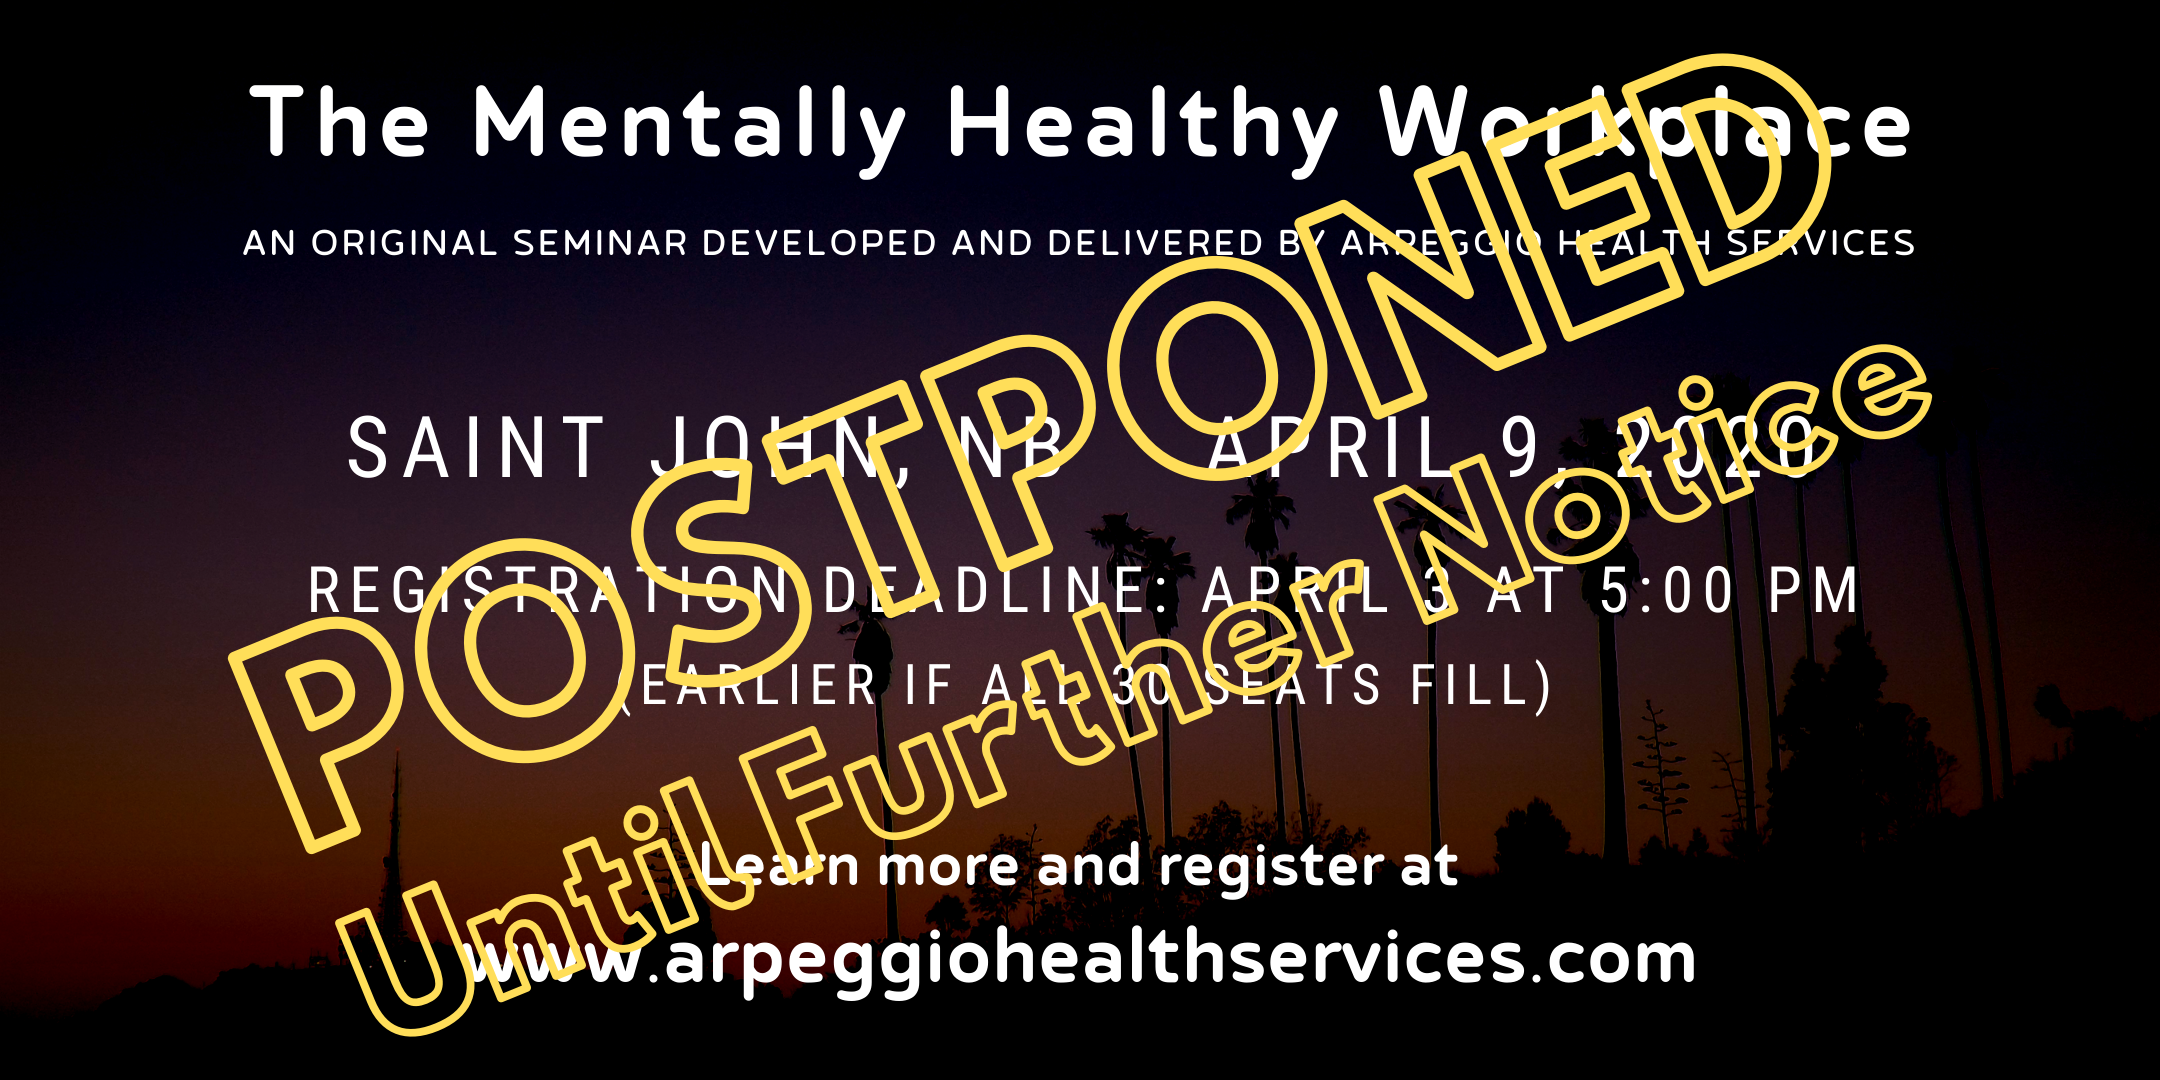 Seminar: The Mentally Healthy Workplace - Saint John, NB